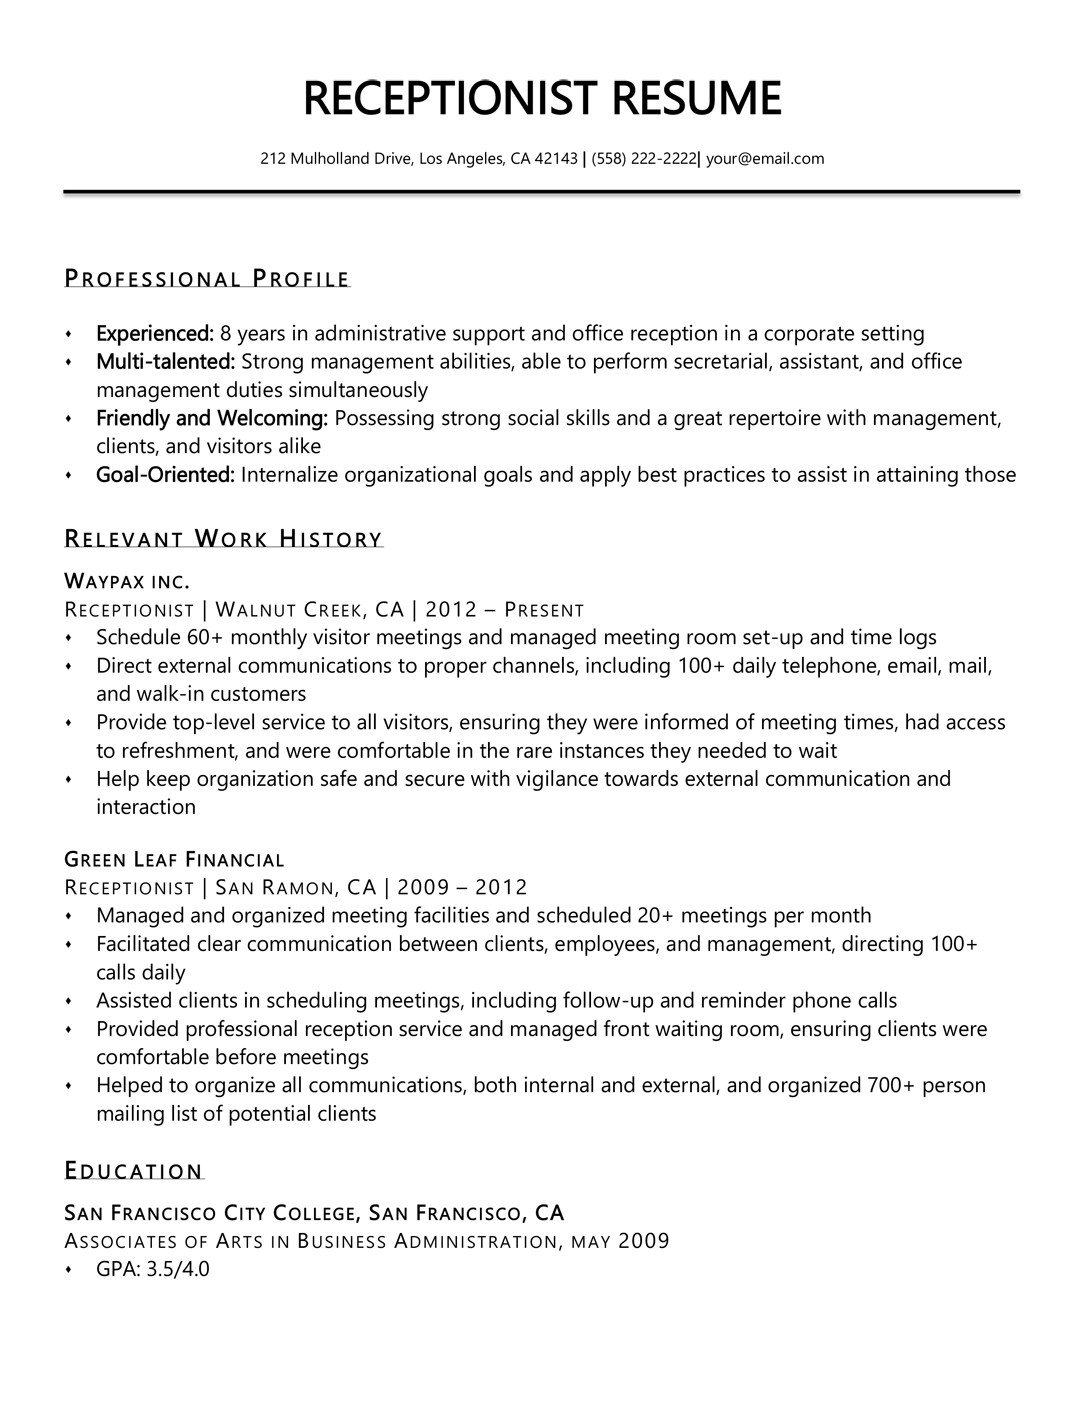 Receptionist resume sample